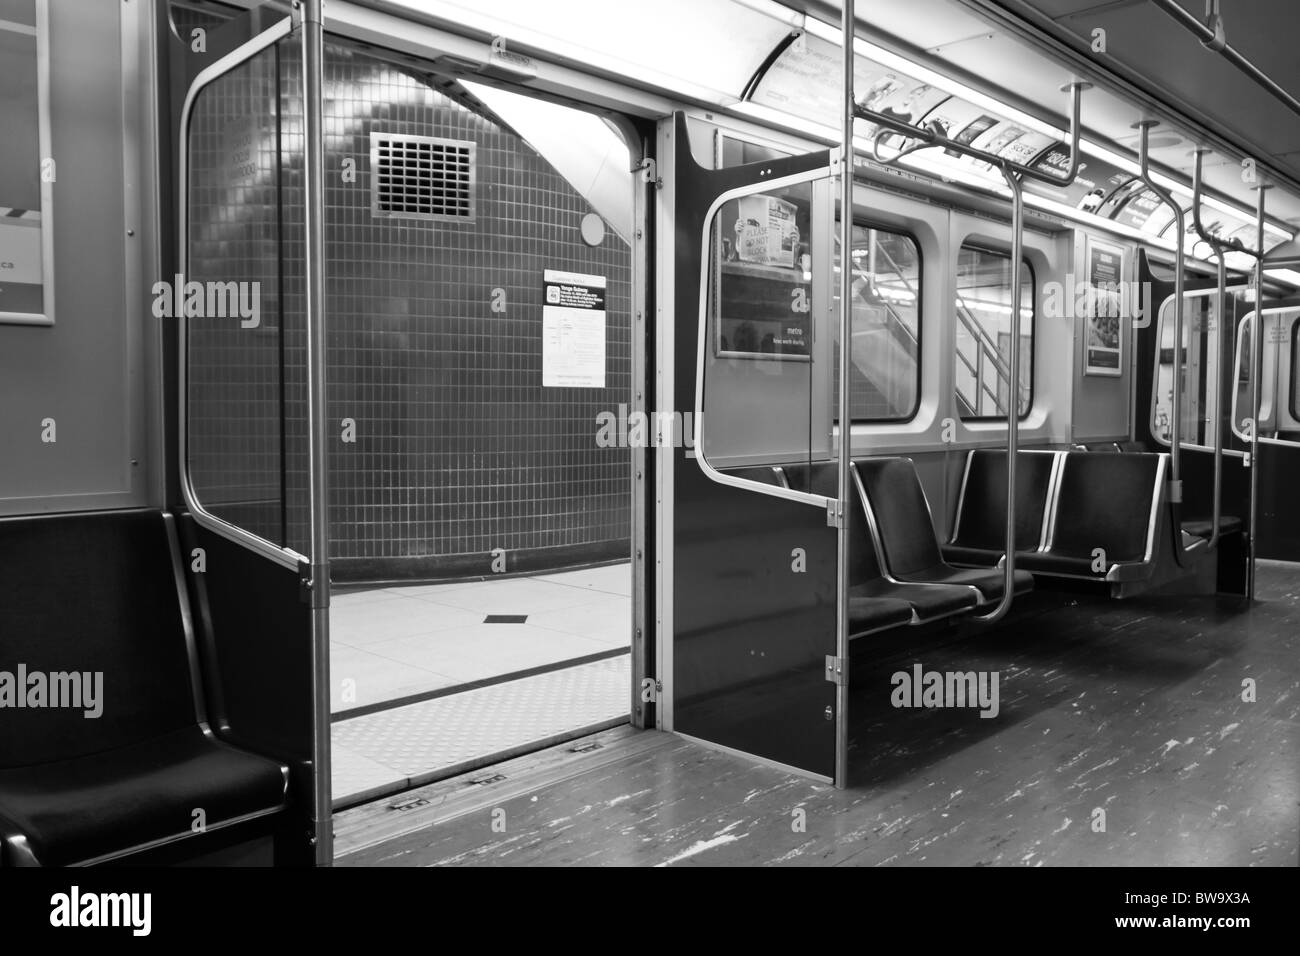 Innere Leere u-Bahn Zug Ttc Toronto schwarz weiß Stockfoto